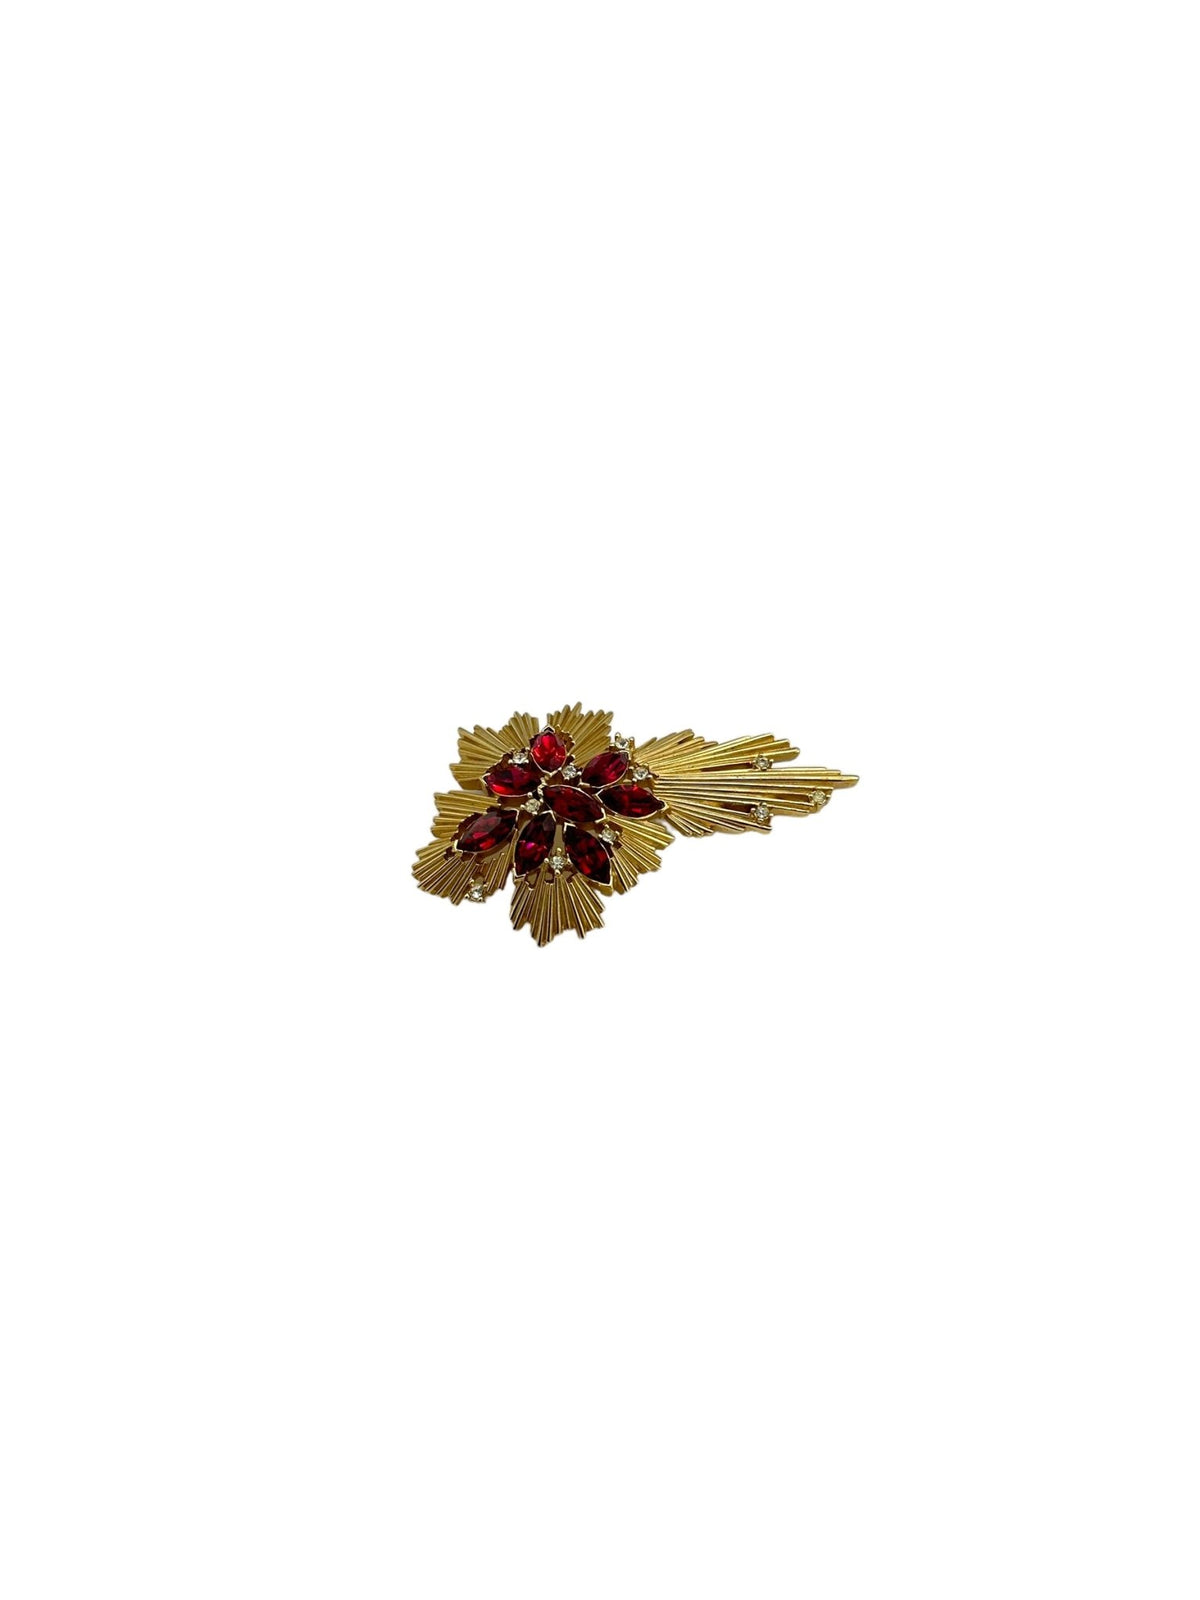 Crown Trifari Gold Ruby Red Rhinestone Atomic Vintage Brooch - 24 Wishes Vintage Jewelry